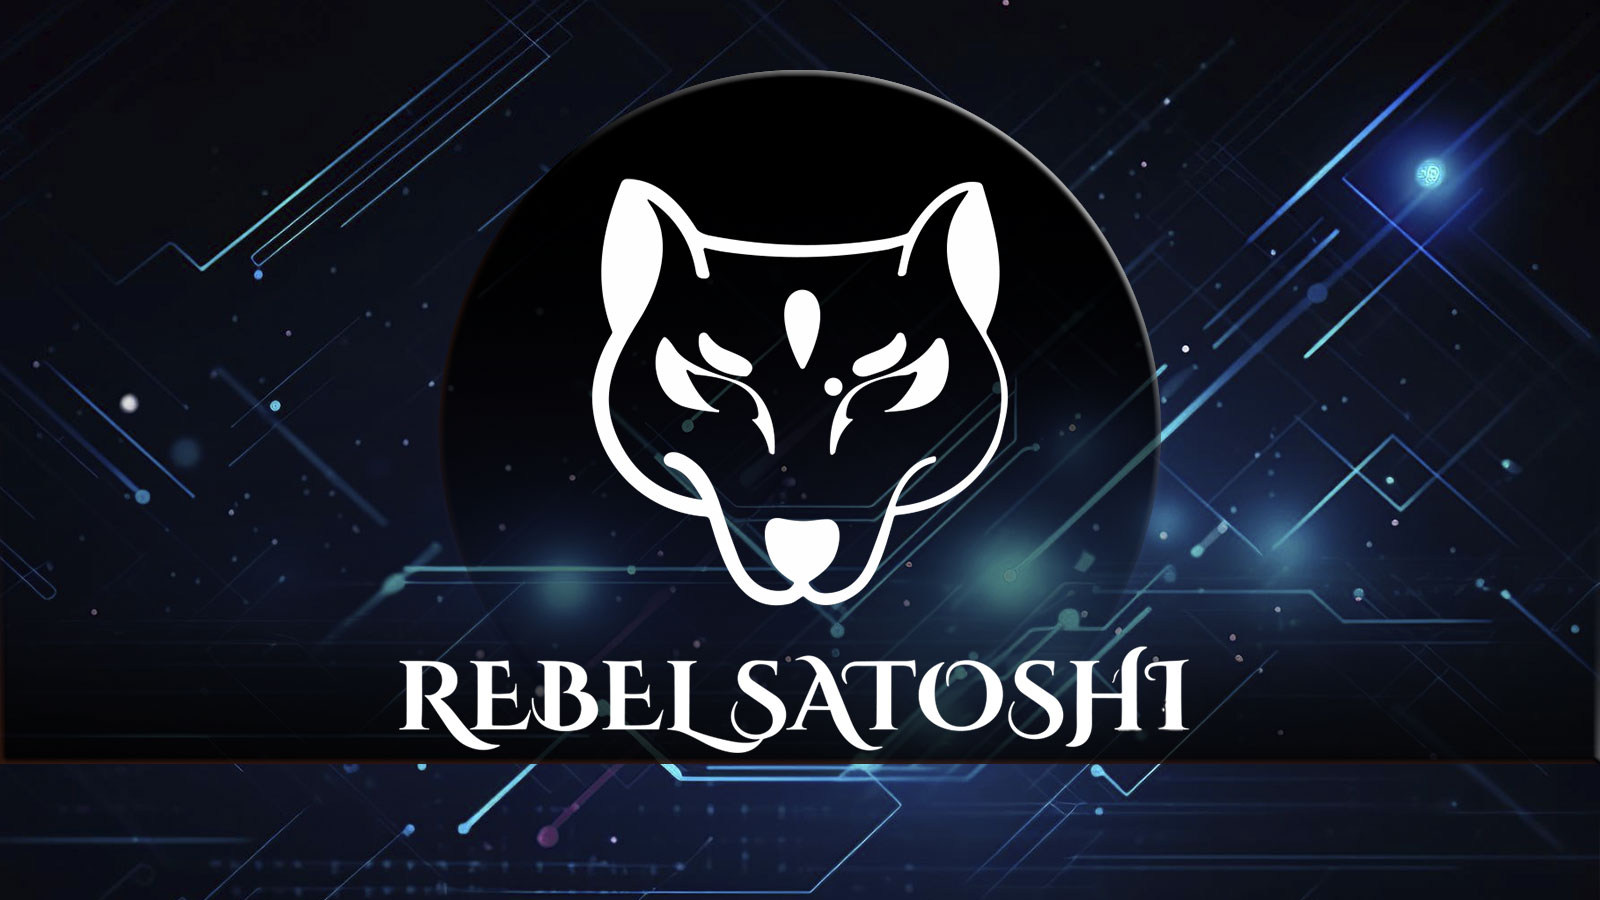 Rebel Satosh (RBLZ) Meme Coin Presale Nears Completion while Kaspa (KAS) Major Altcoin Surges Again